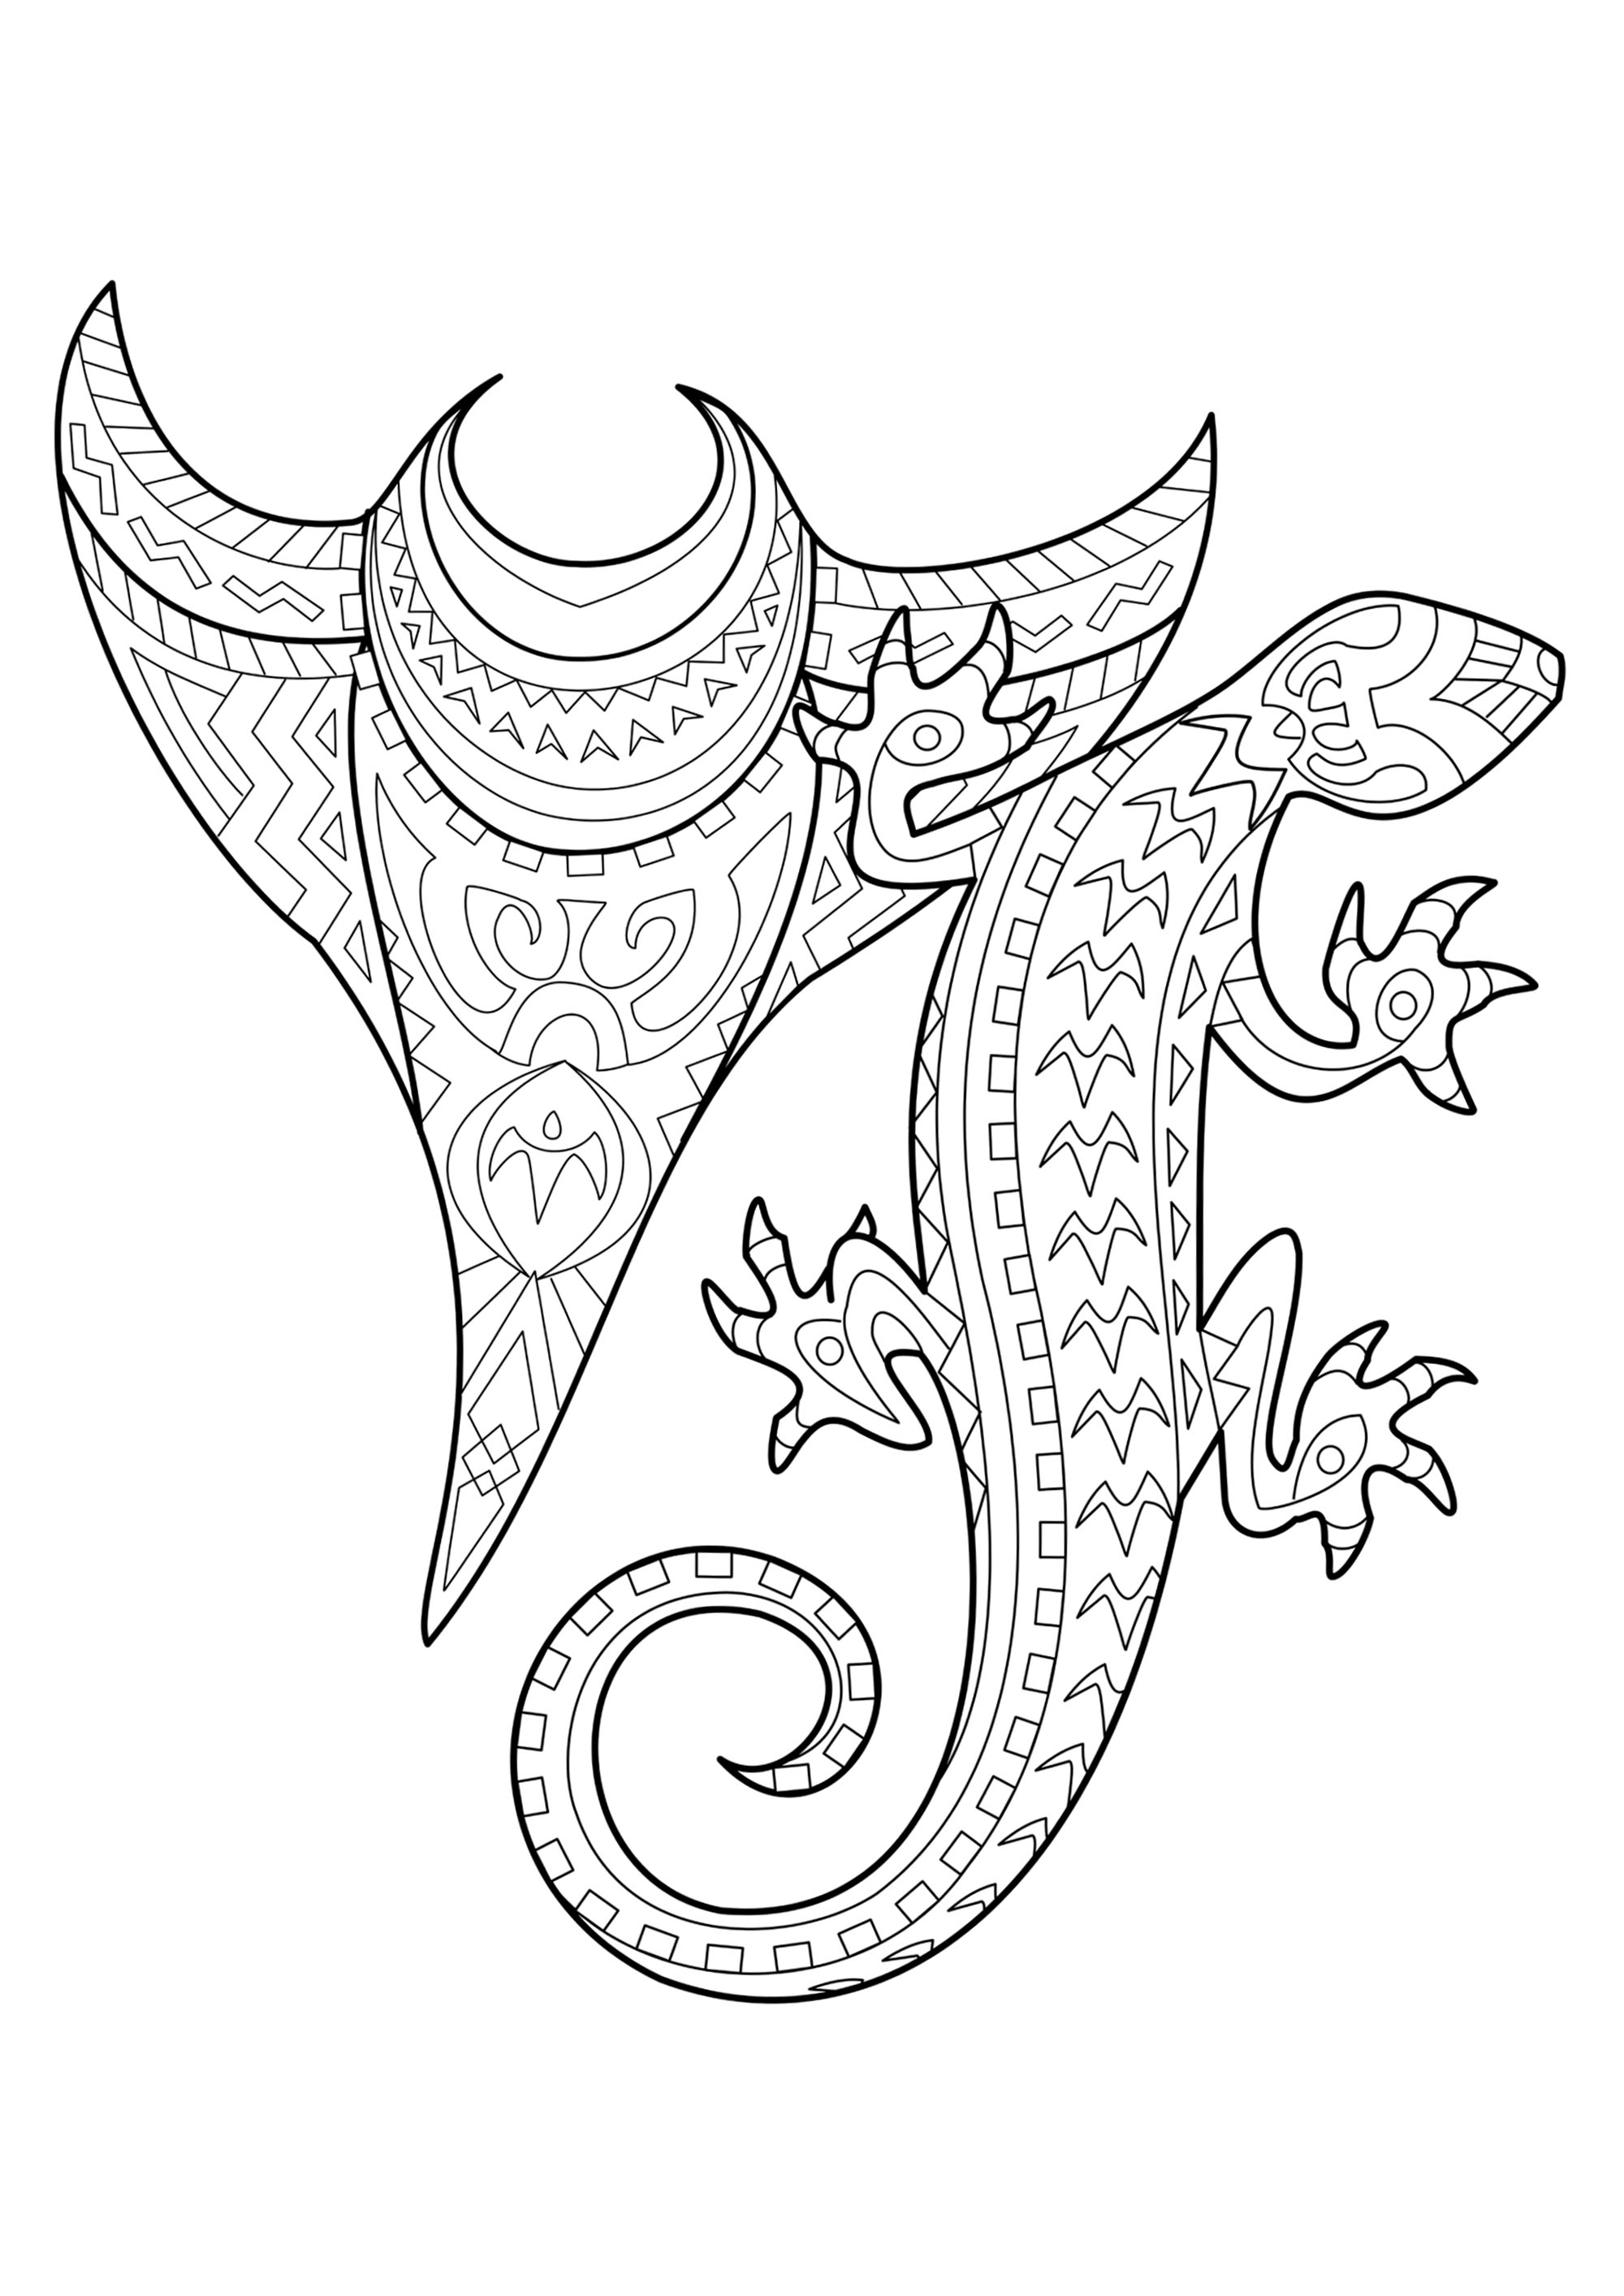 Tatouage Polynesien : Nga tama p Punga. Coloriage issu du livre Polynesian Tattoos : 42 Modern Tribal Designs to Color and Explore par l'artiste italien Roberto “GiErre” Gemori.A découvrir ici : www.shambhala.com/polynesian-tattoos.html Site de l'artiste : Tattootribes.com